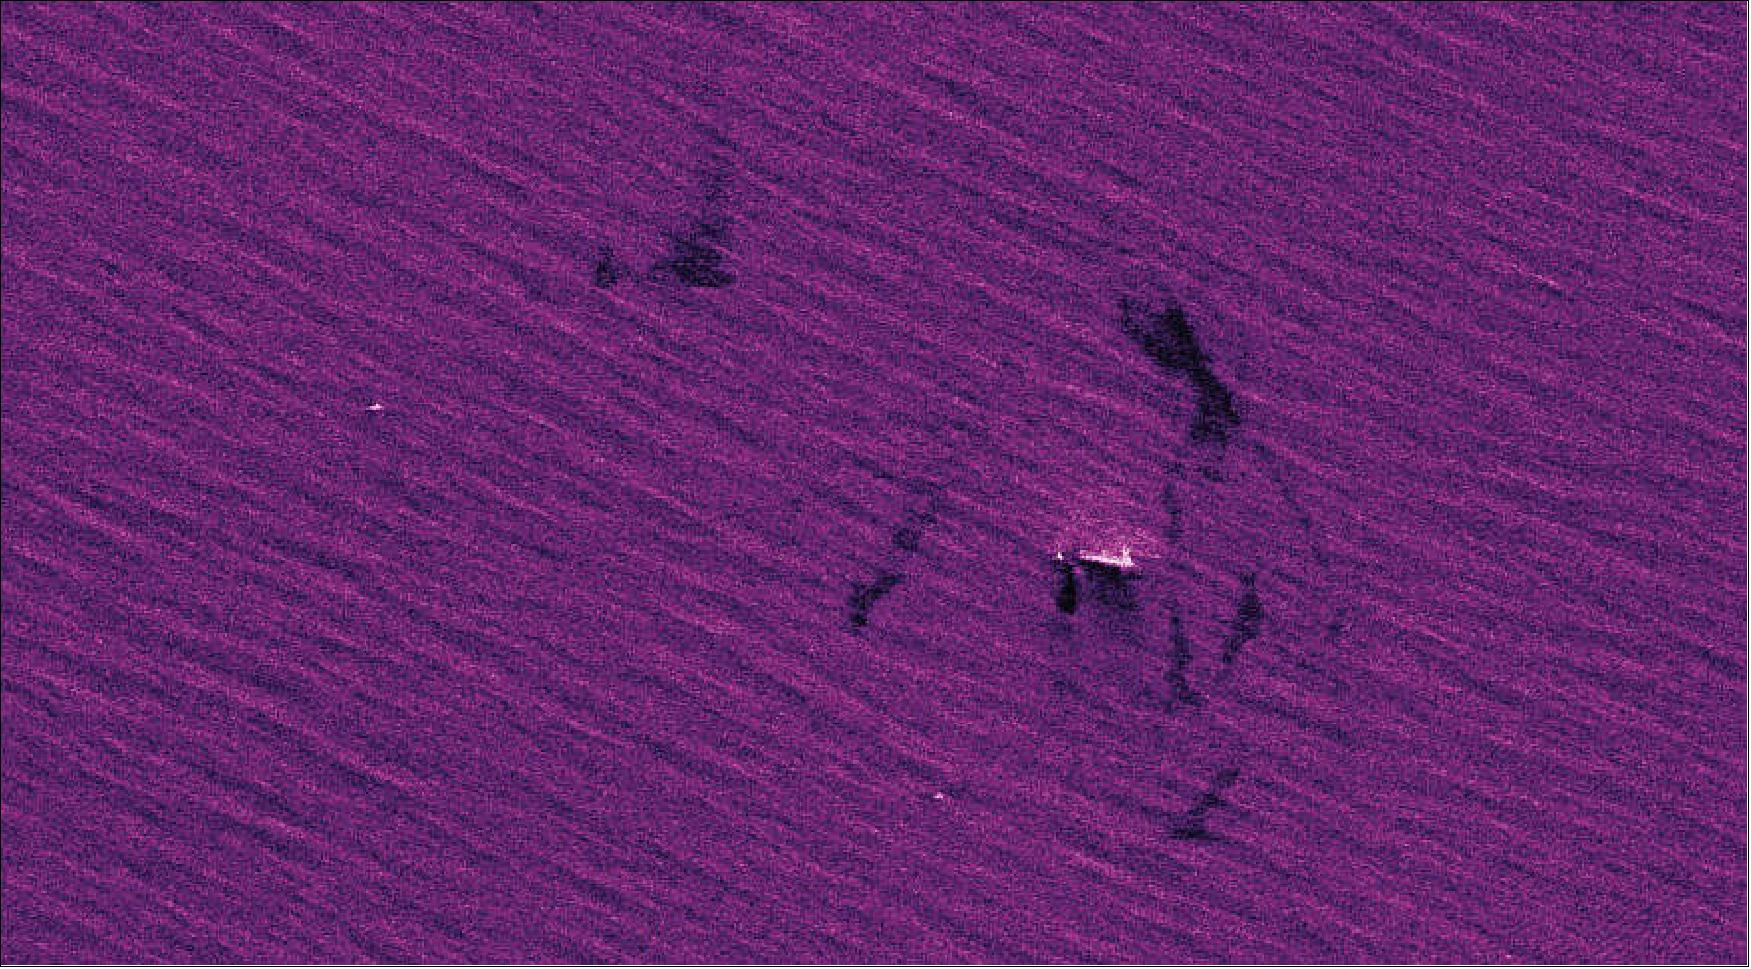 Figure 2: Iceye radar satellite image of the Gulf of Oman shows oil slicks around a tanker (image credit: Iceye)